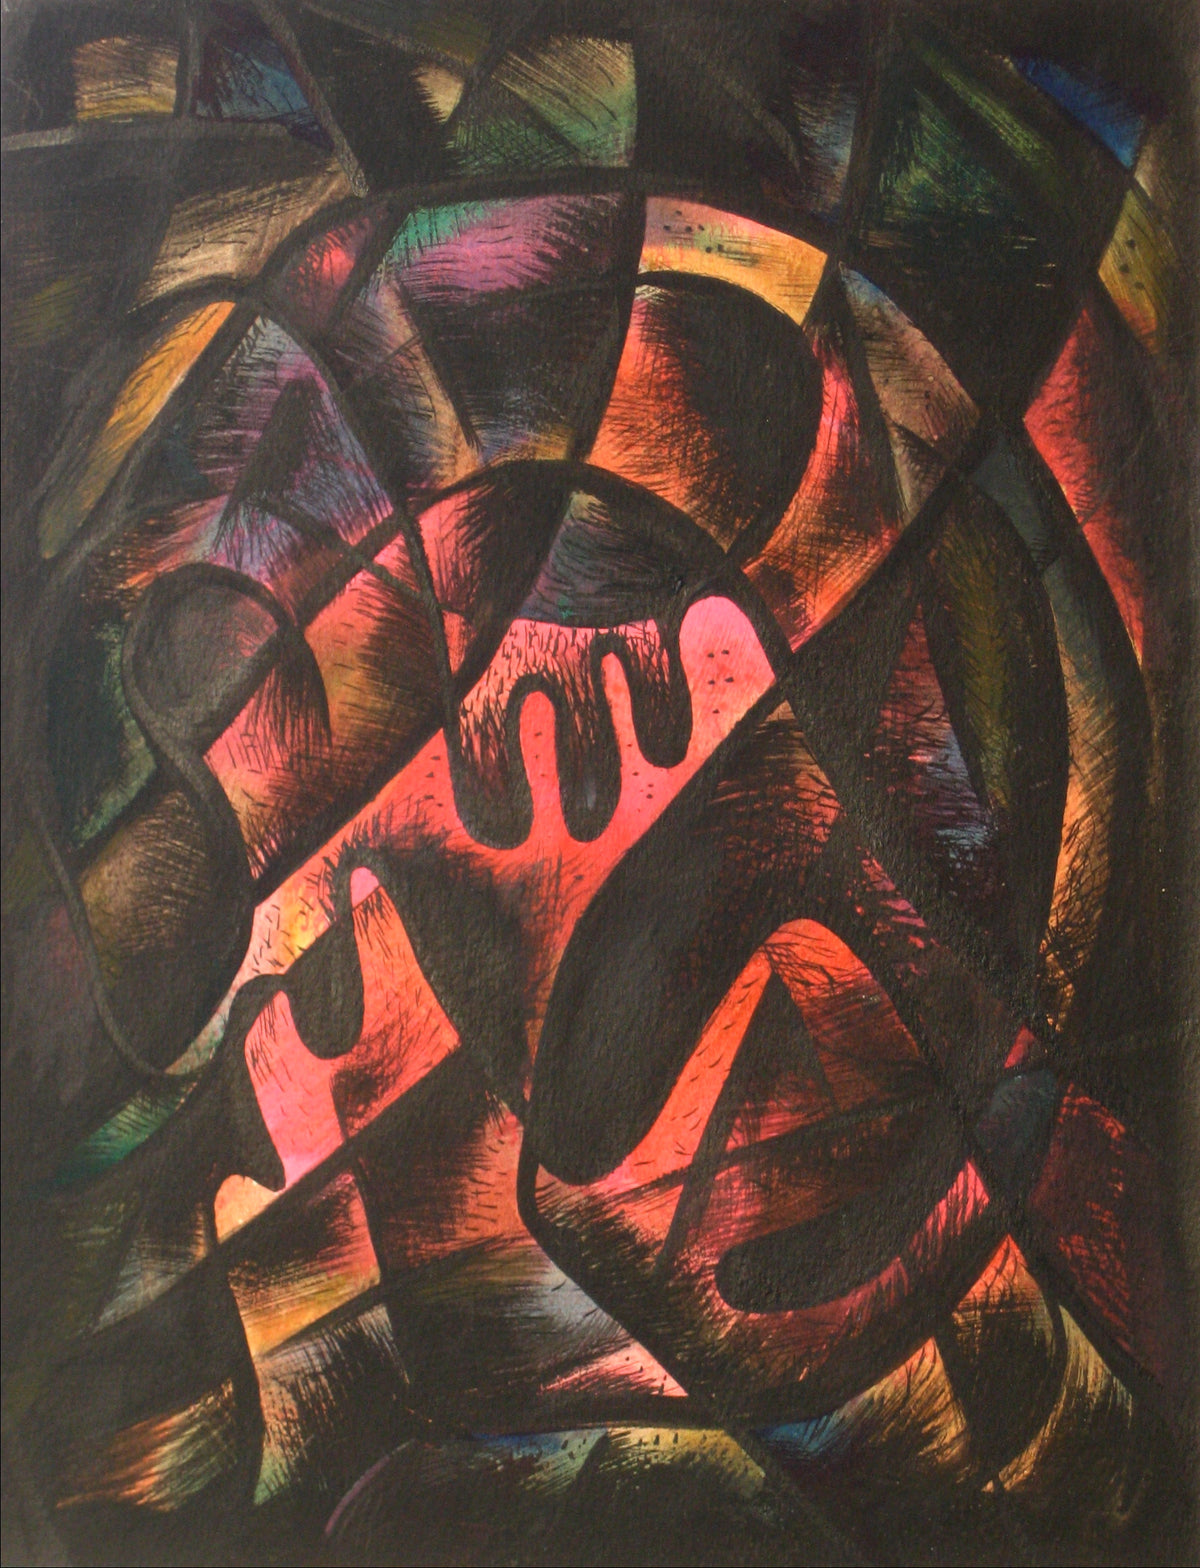 Neon Surrealist Abstract&lt;br&gt;1940s, Tempera Paint on Paper&lt;br&gt;&lt;br&gt;#13529